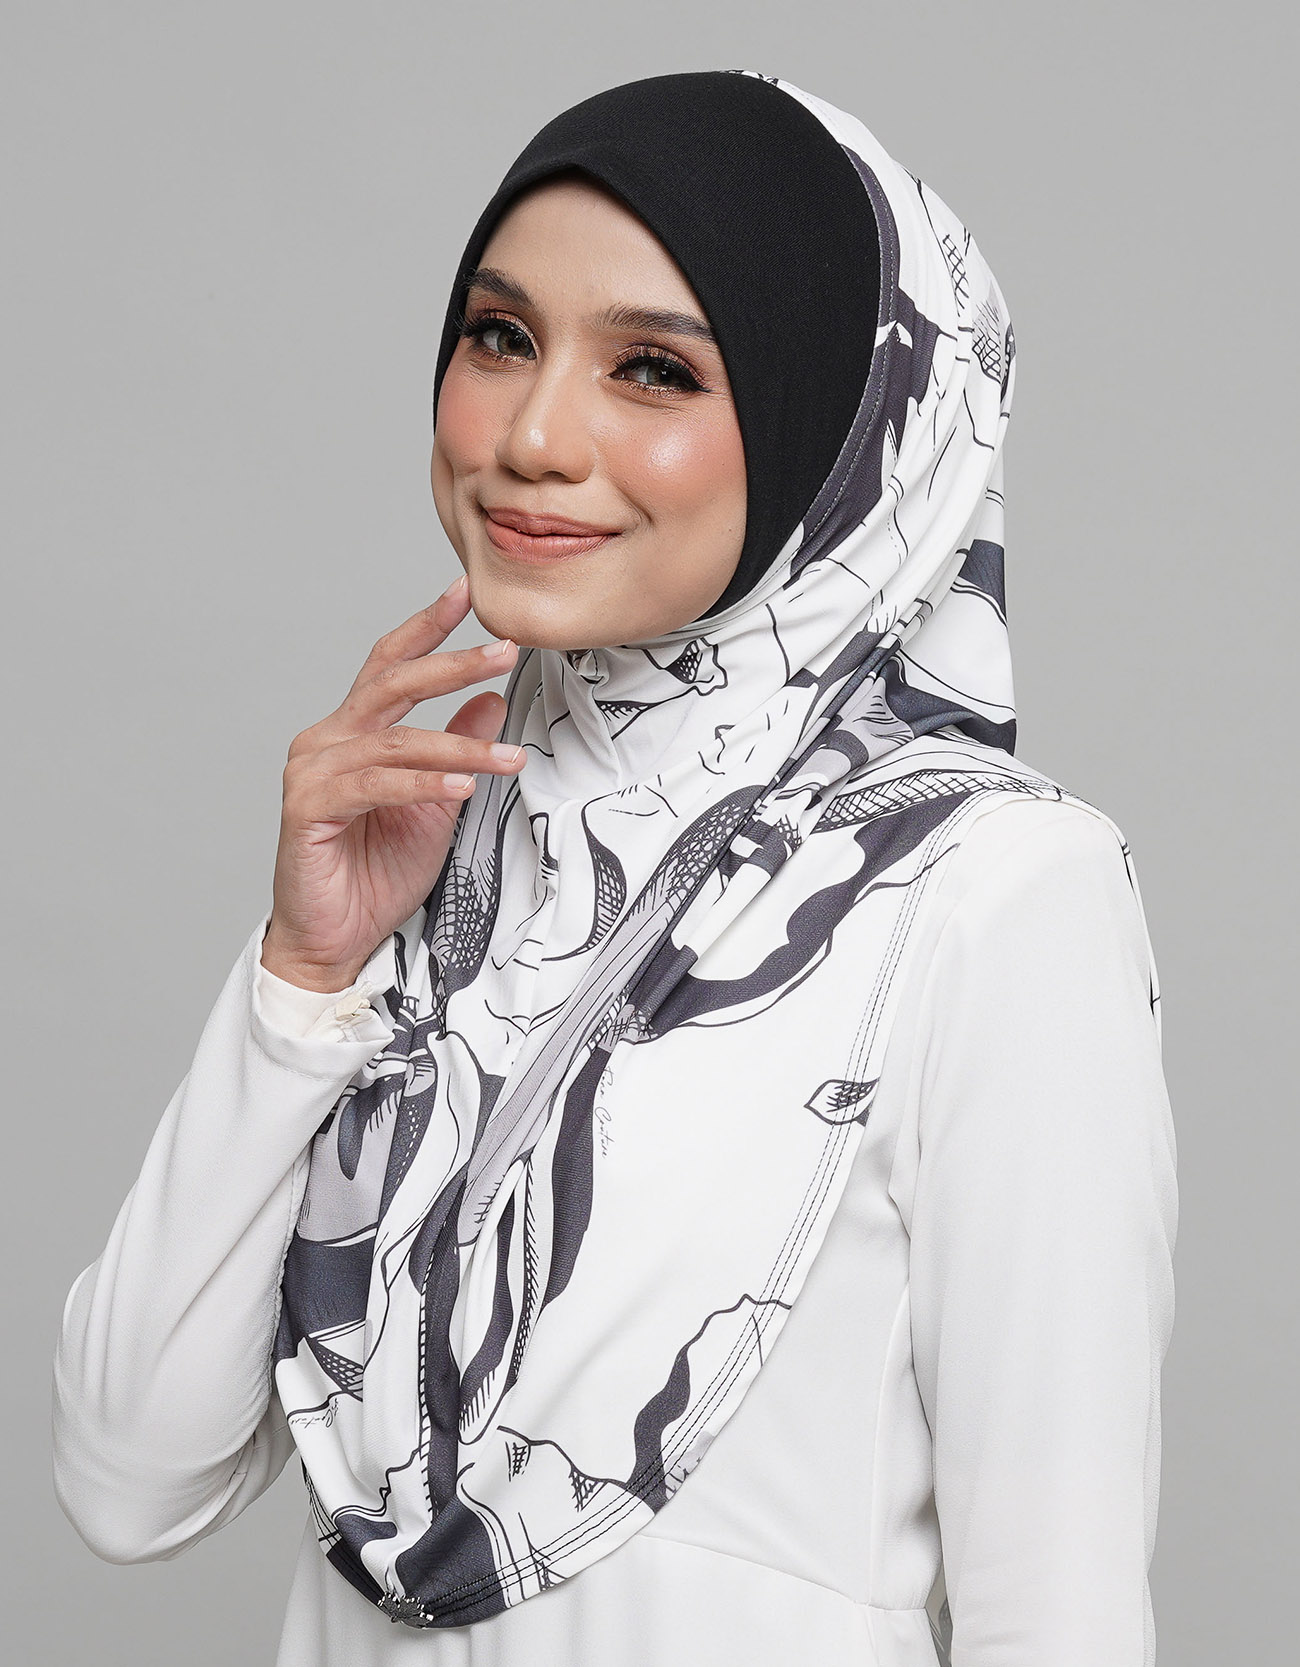 Express Hijab Damia Signature 04 - Black Edition&w=300&zc=1